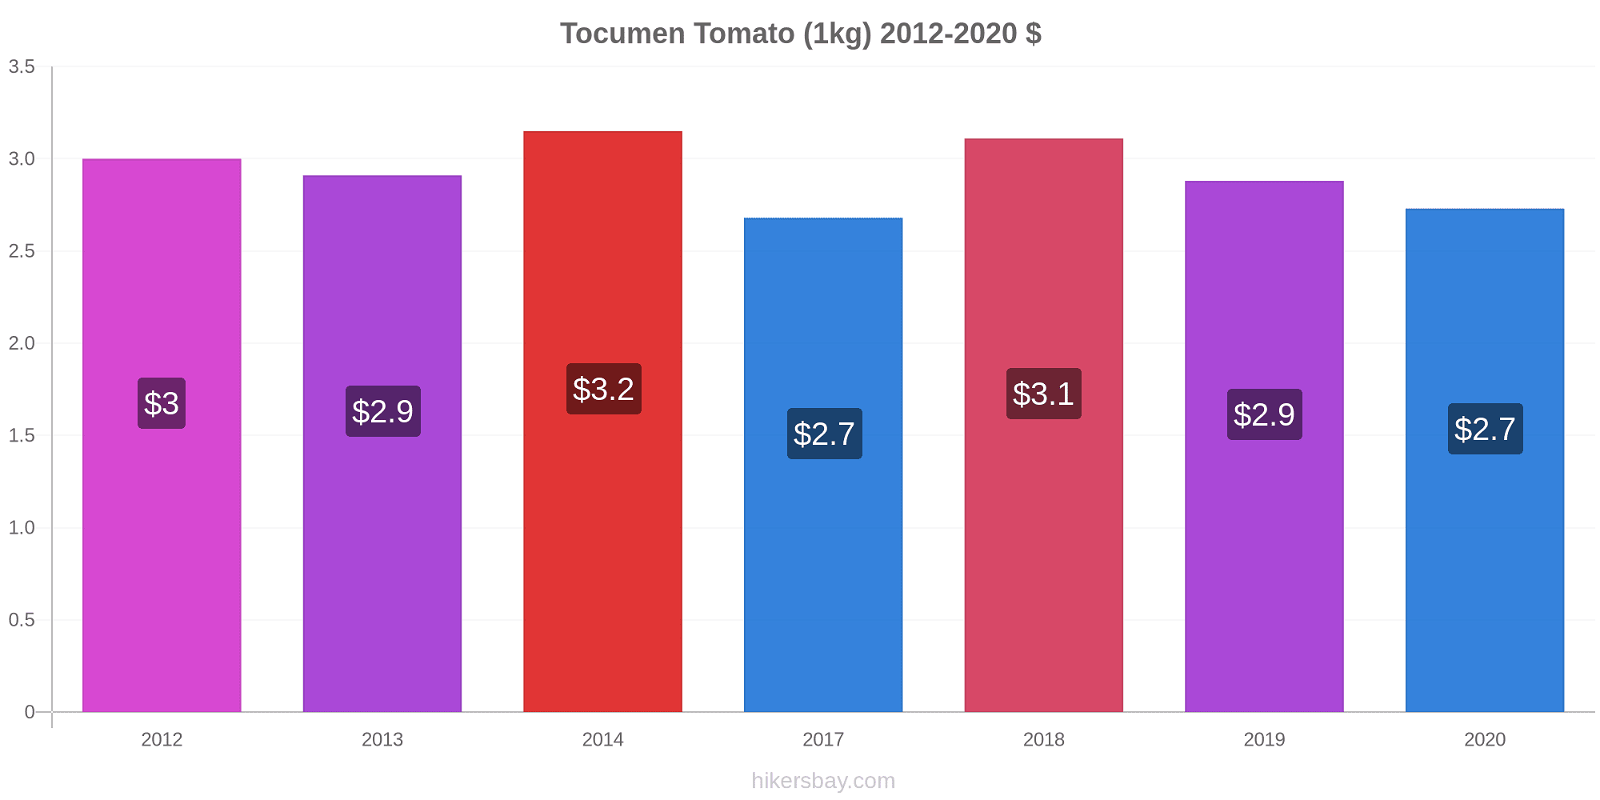 Tocumen price changes Tomato (1kg) hikersbay.com